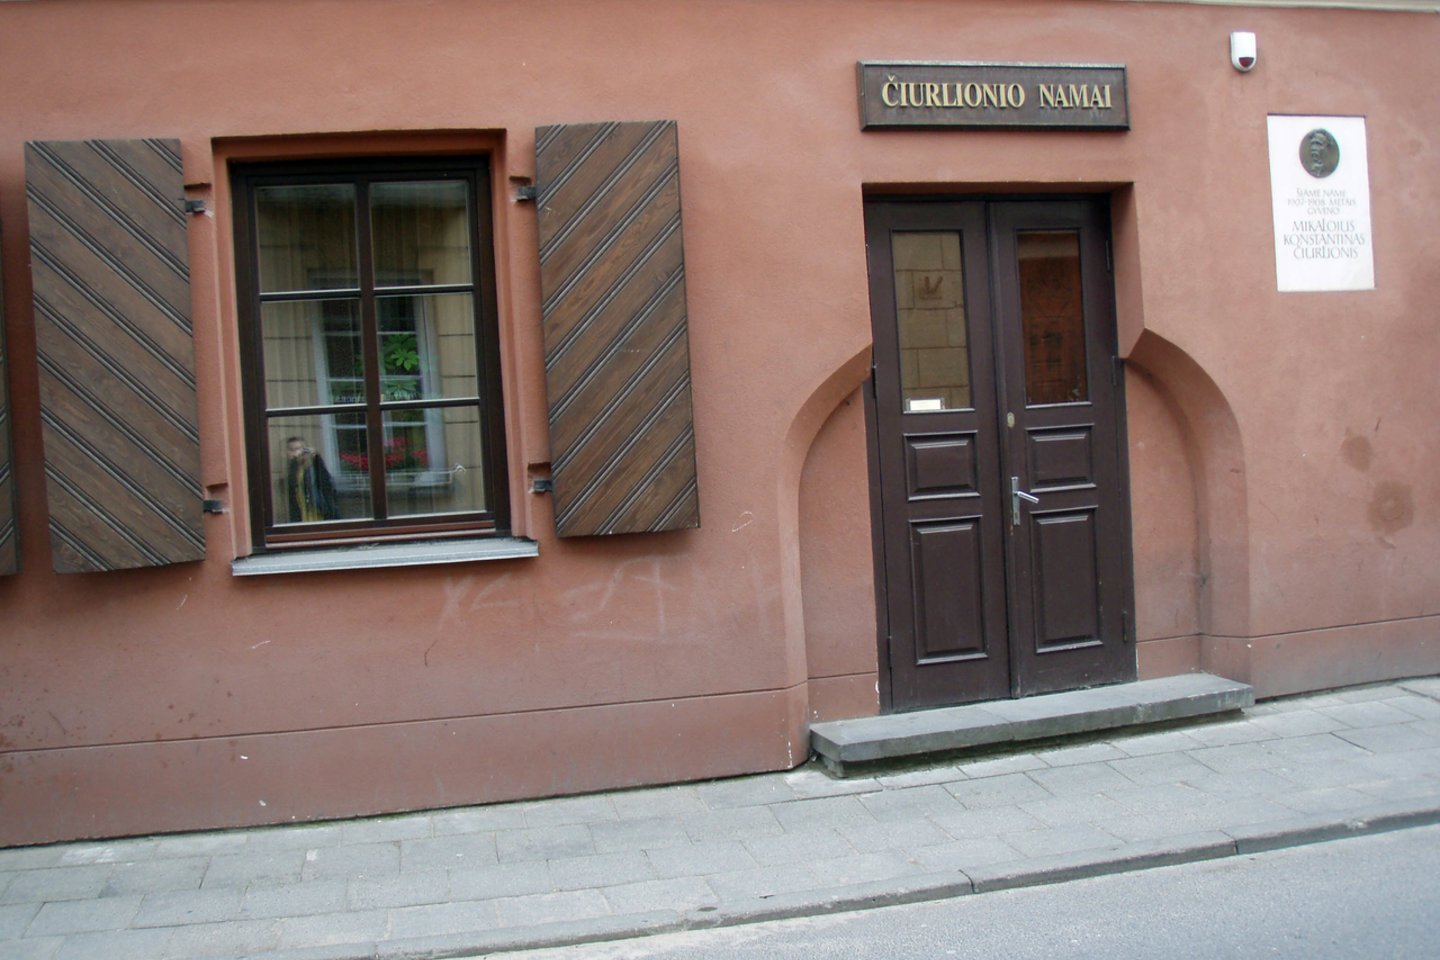  M.K.Čiurlionio namai Vilniuje.<br> Vikipedija nuotr.